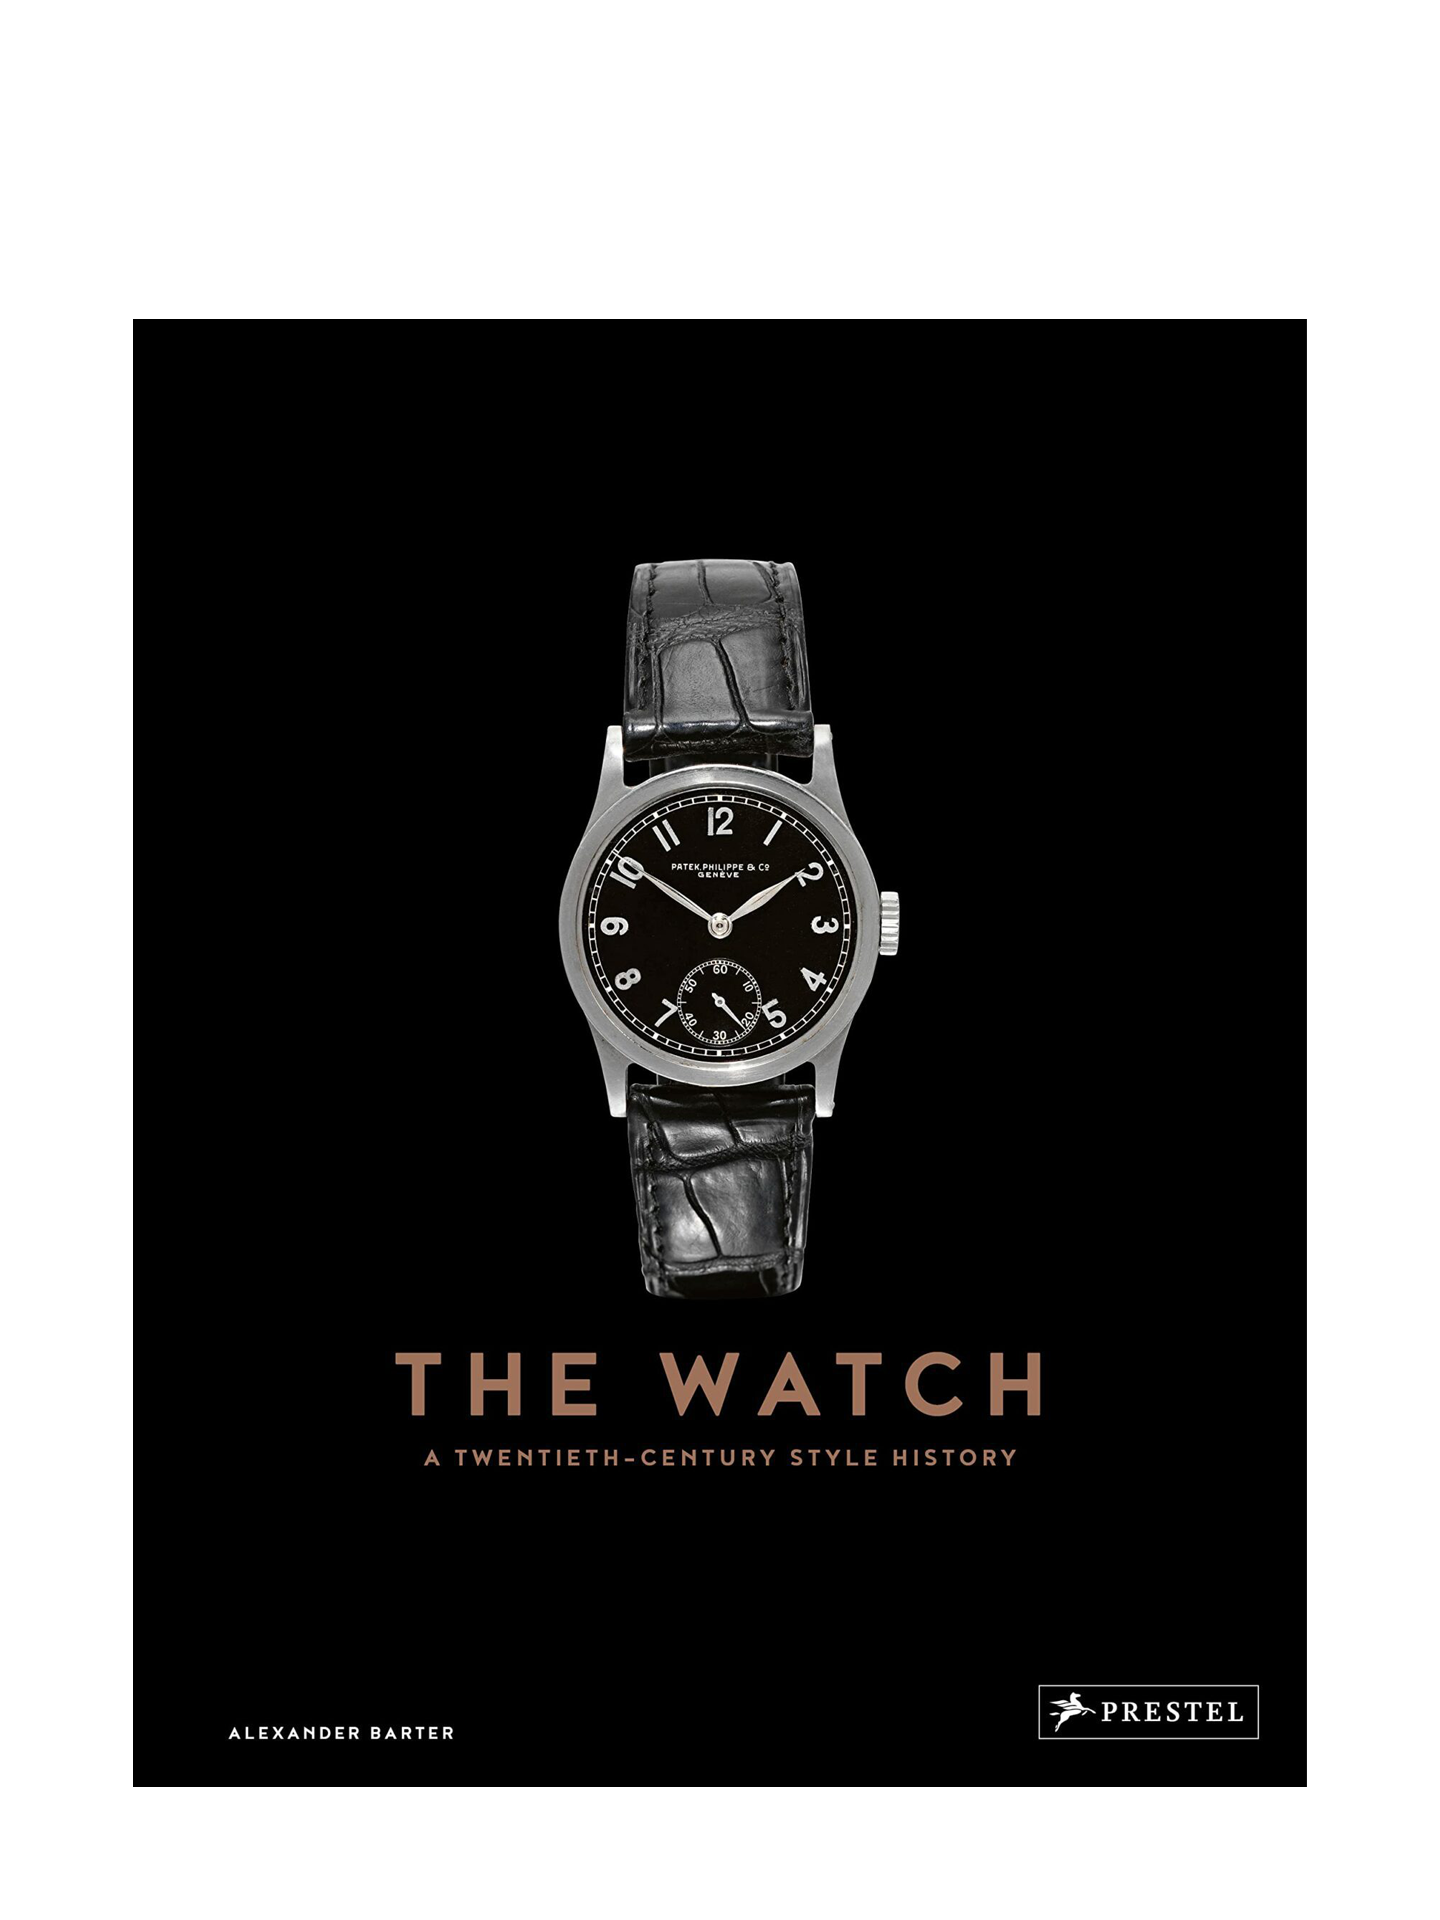 The Watch — A Twentieth Century Style History